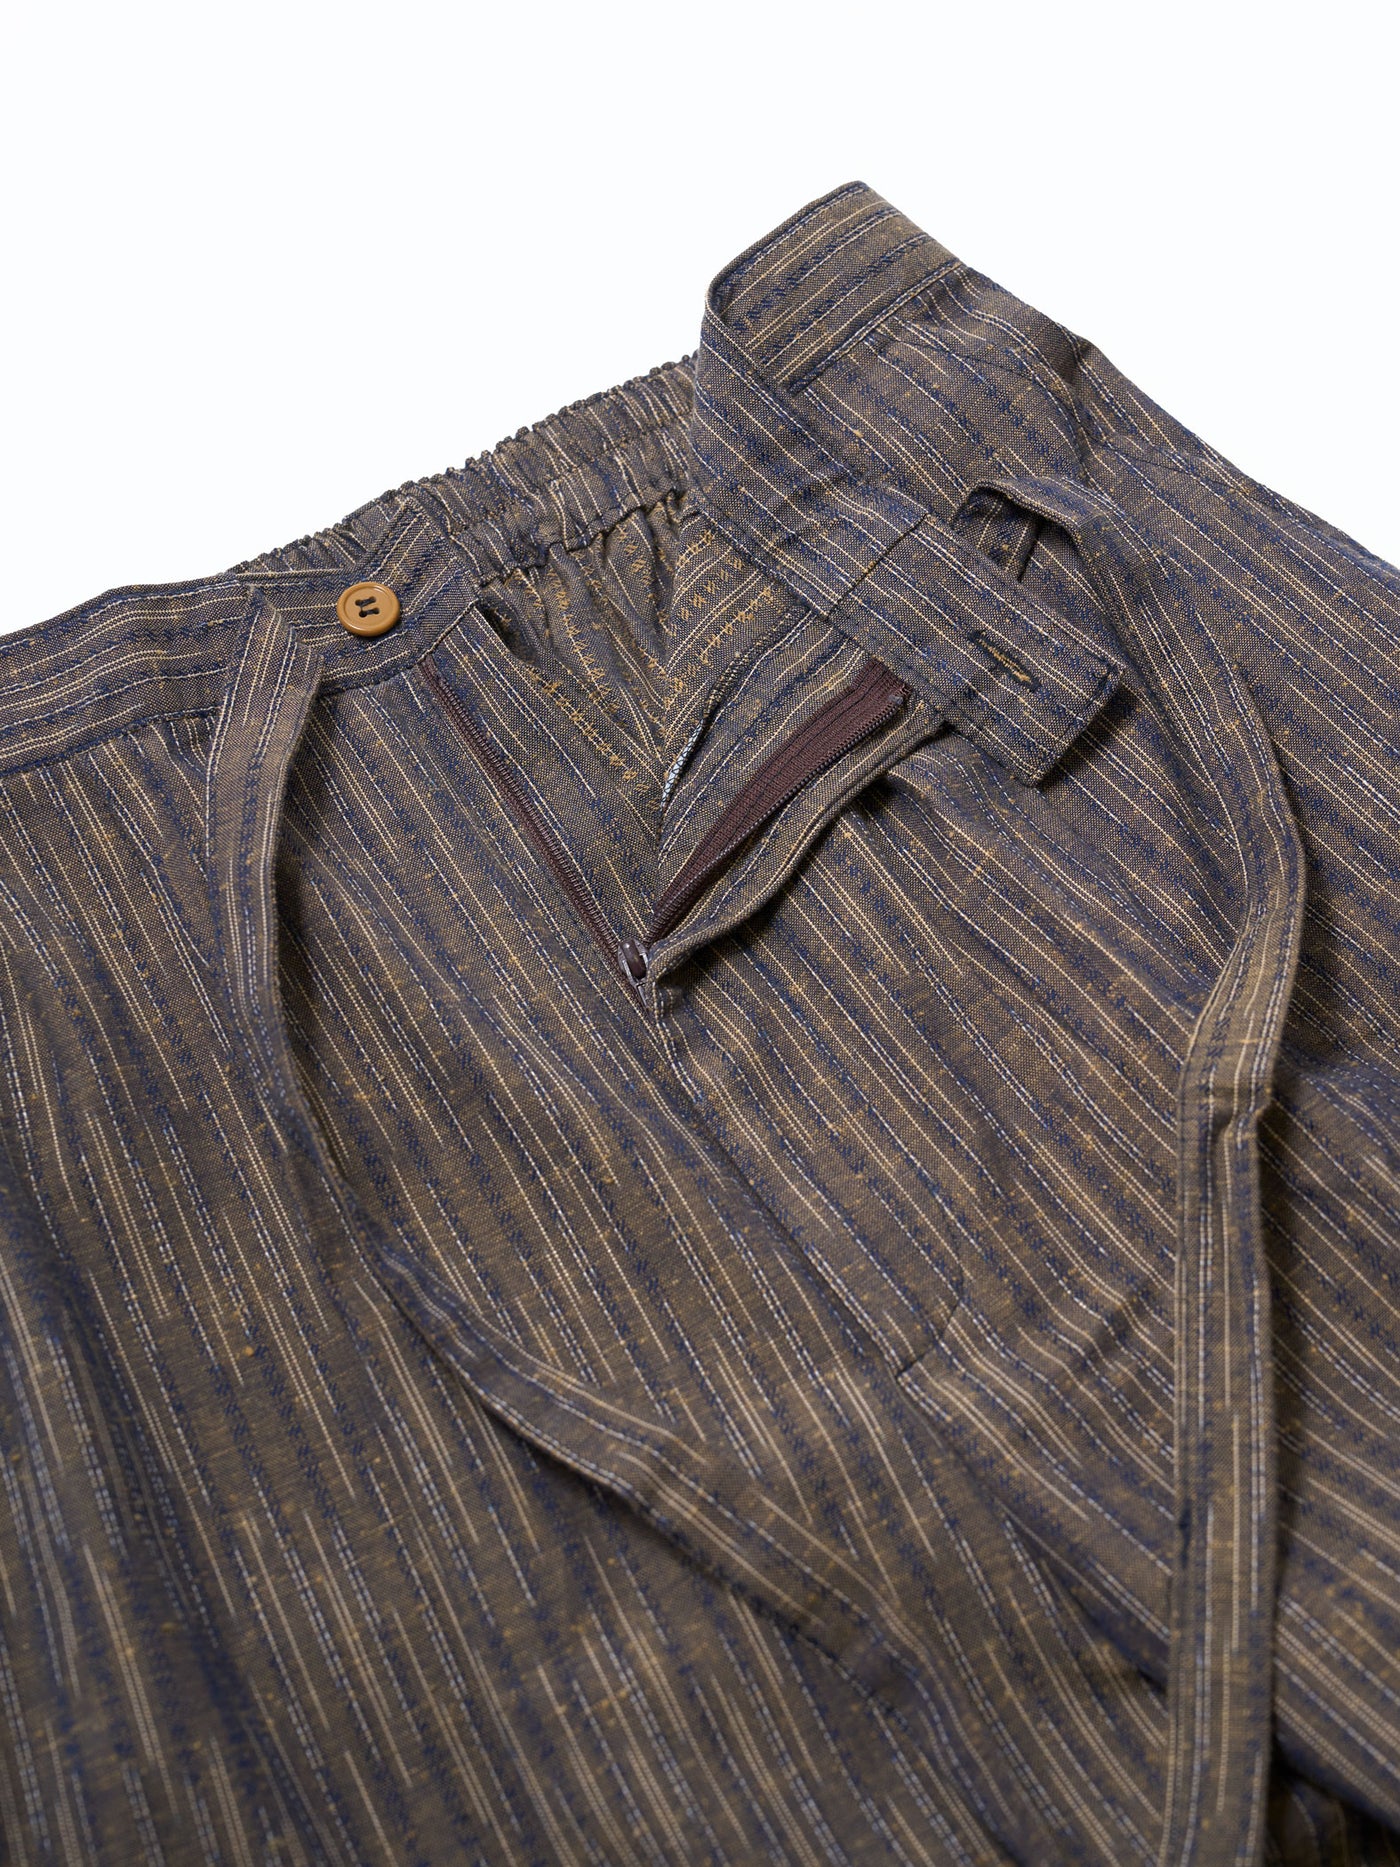 Yanagi Bronze Samue Jacket and Lounge Pants